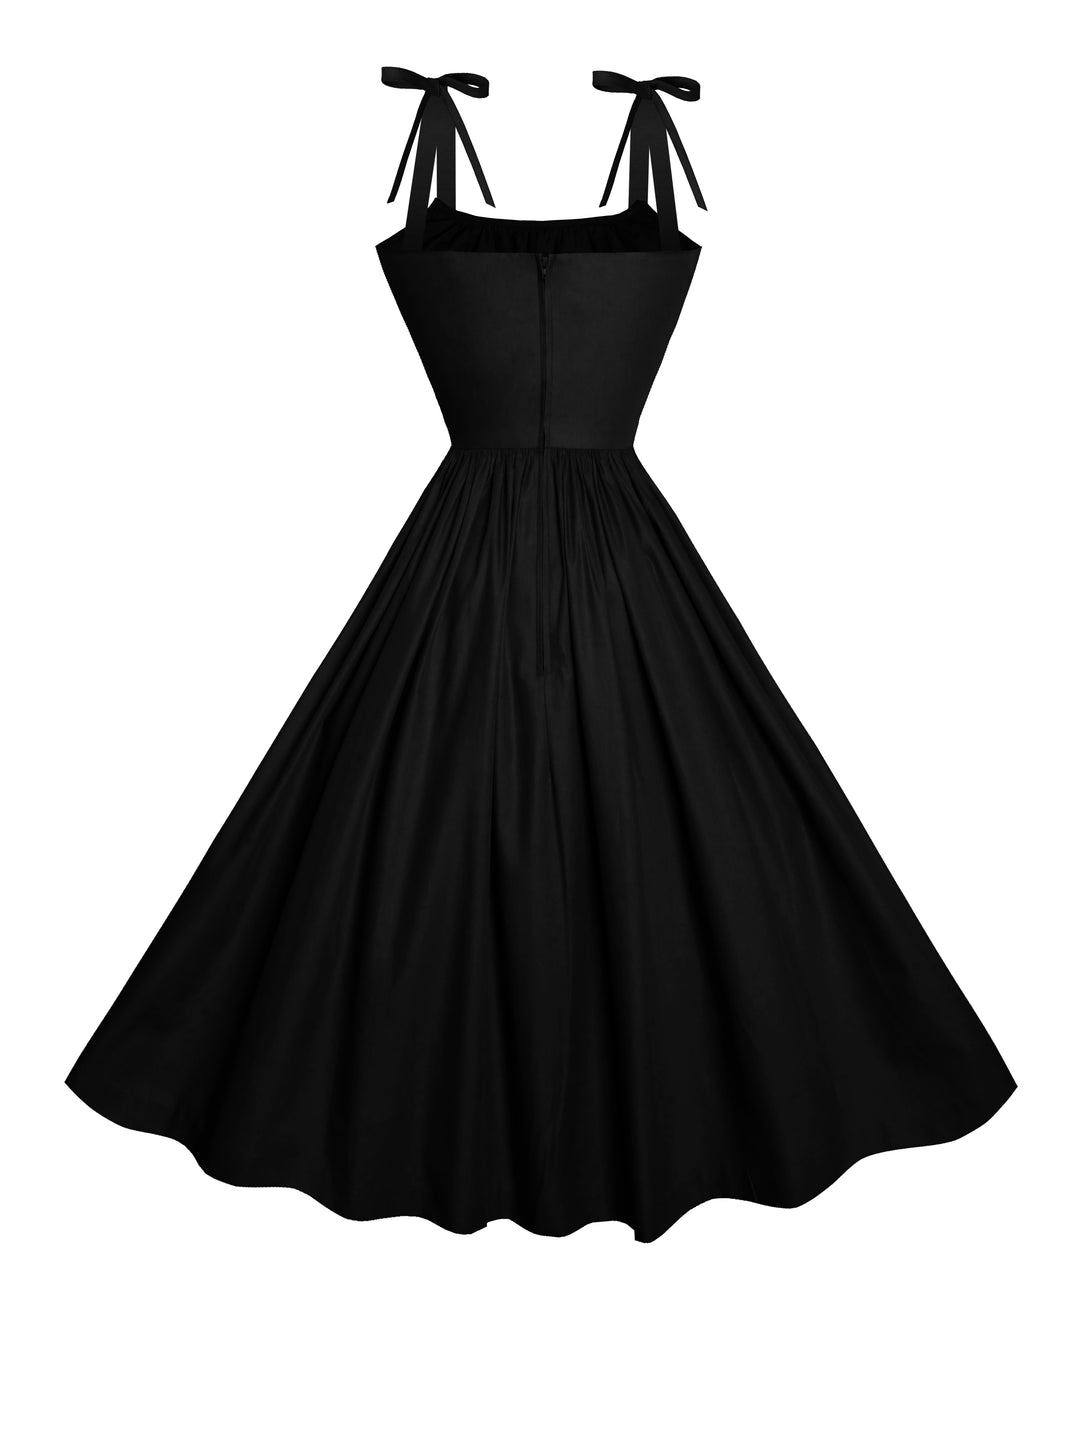 MTO - Kelly Dress in Raven Black Cotton